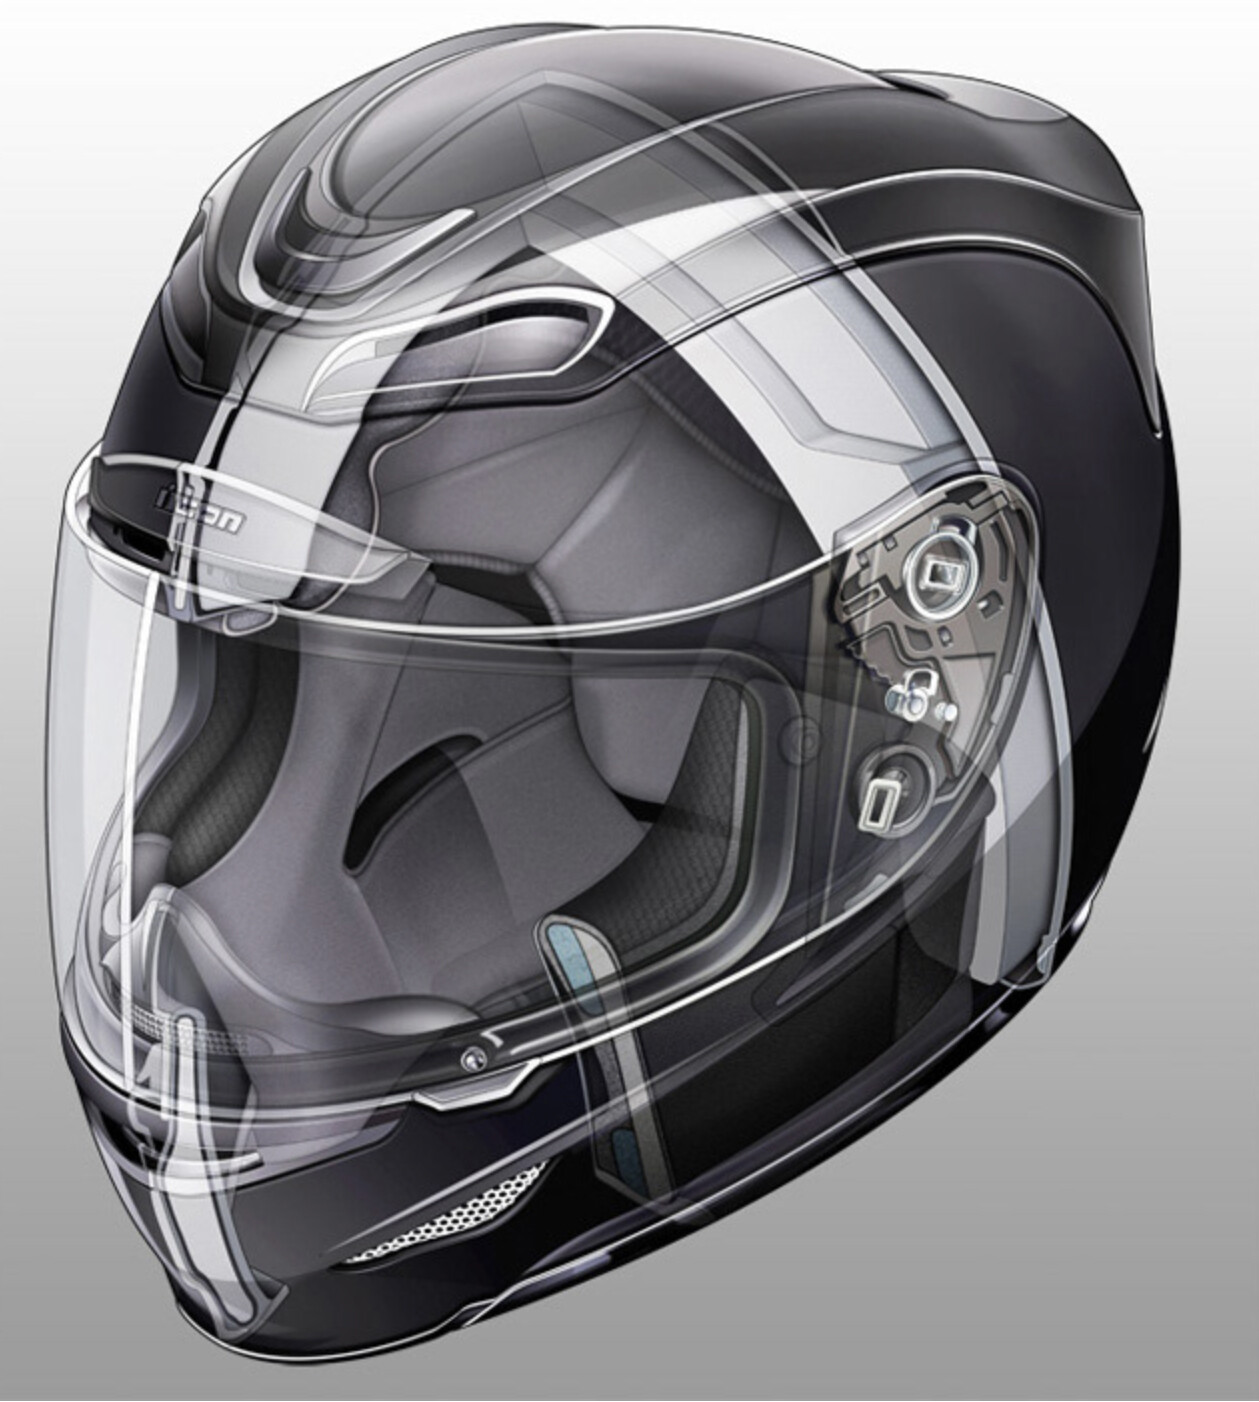 ICON Airmada Helmet Illustration